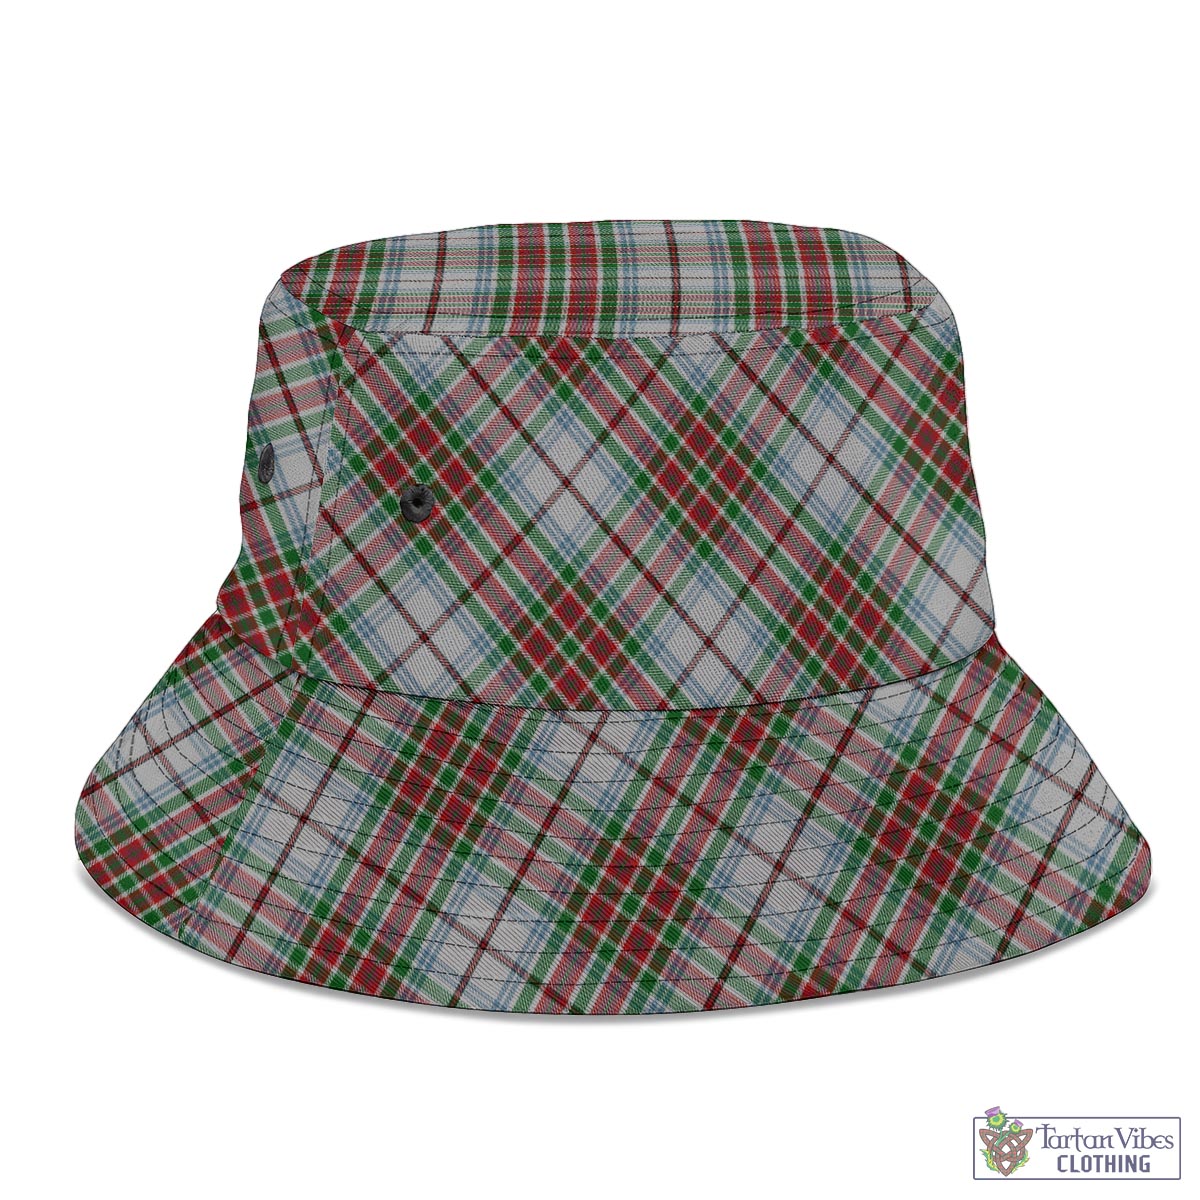 Tartan Vibes Clothing MacBain Dress Tartan Bucket Hat